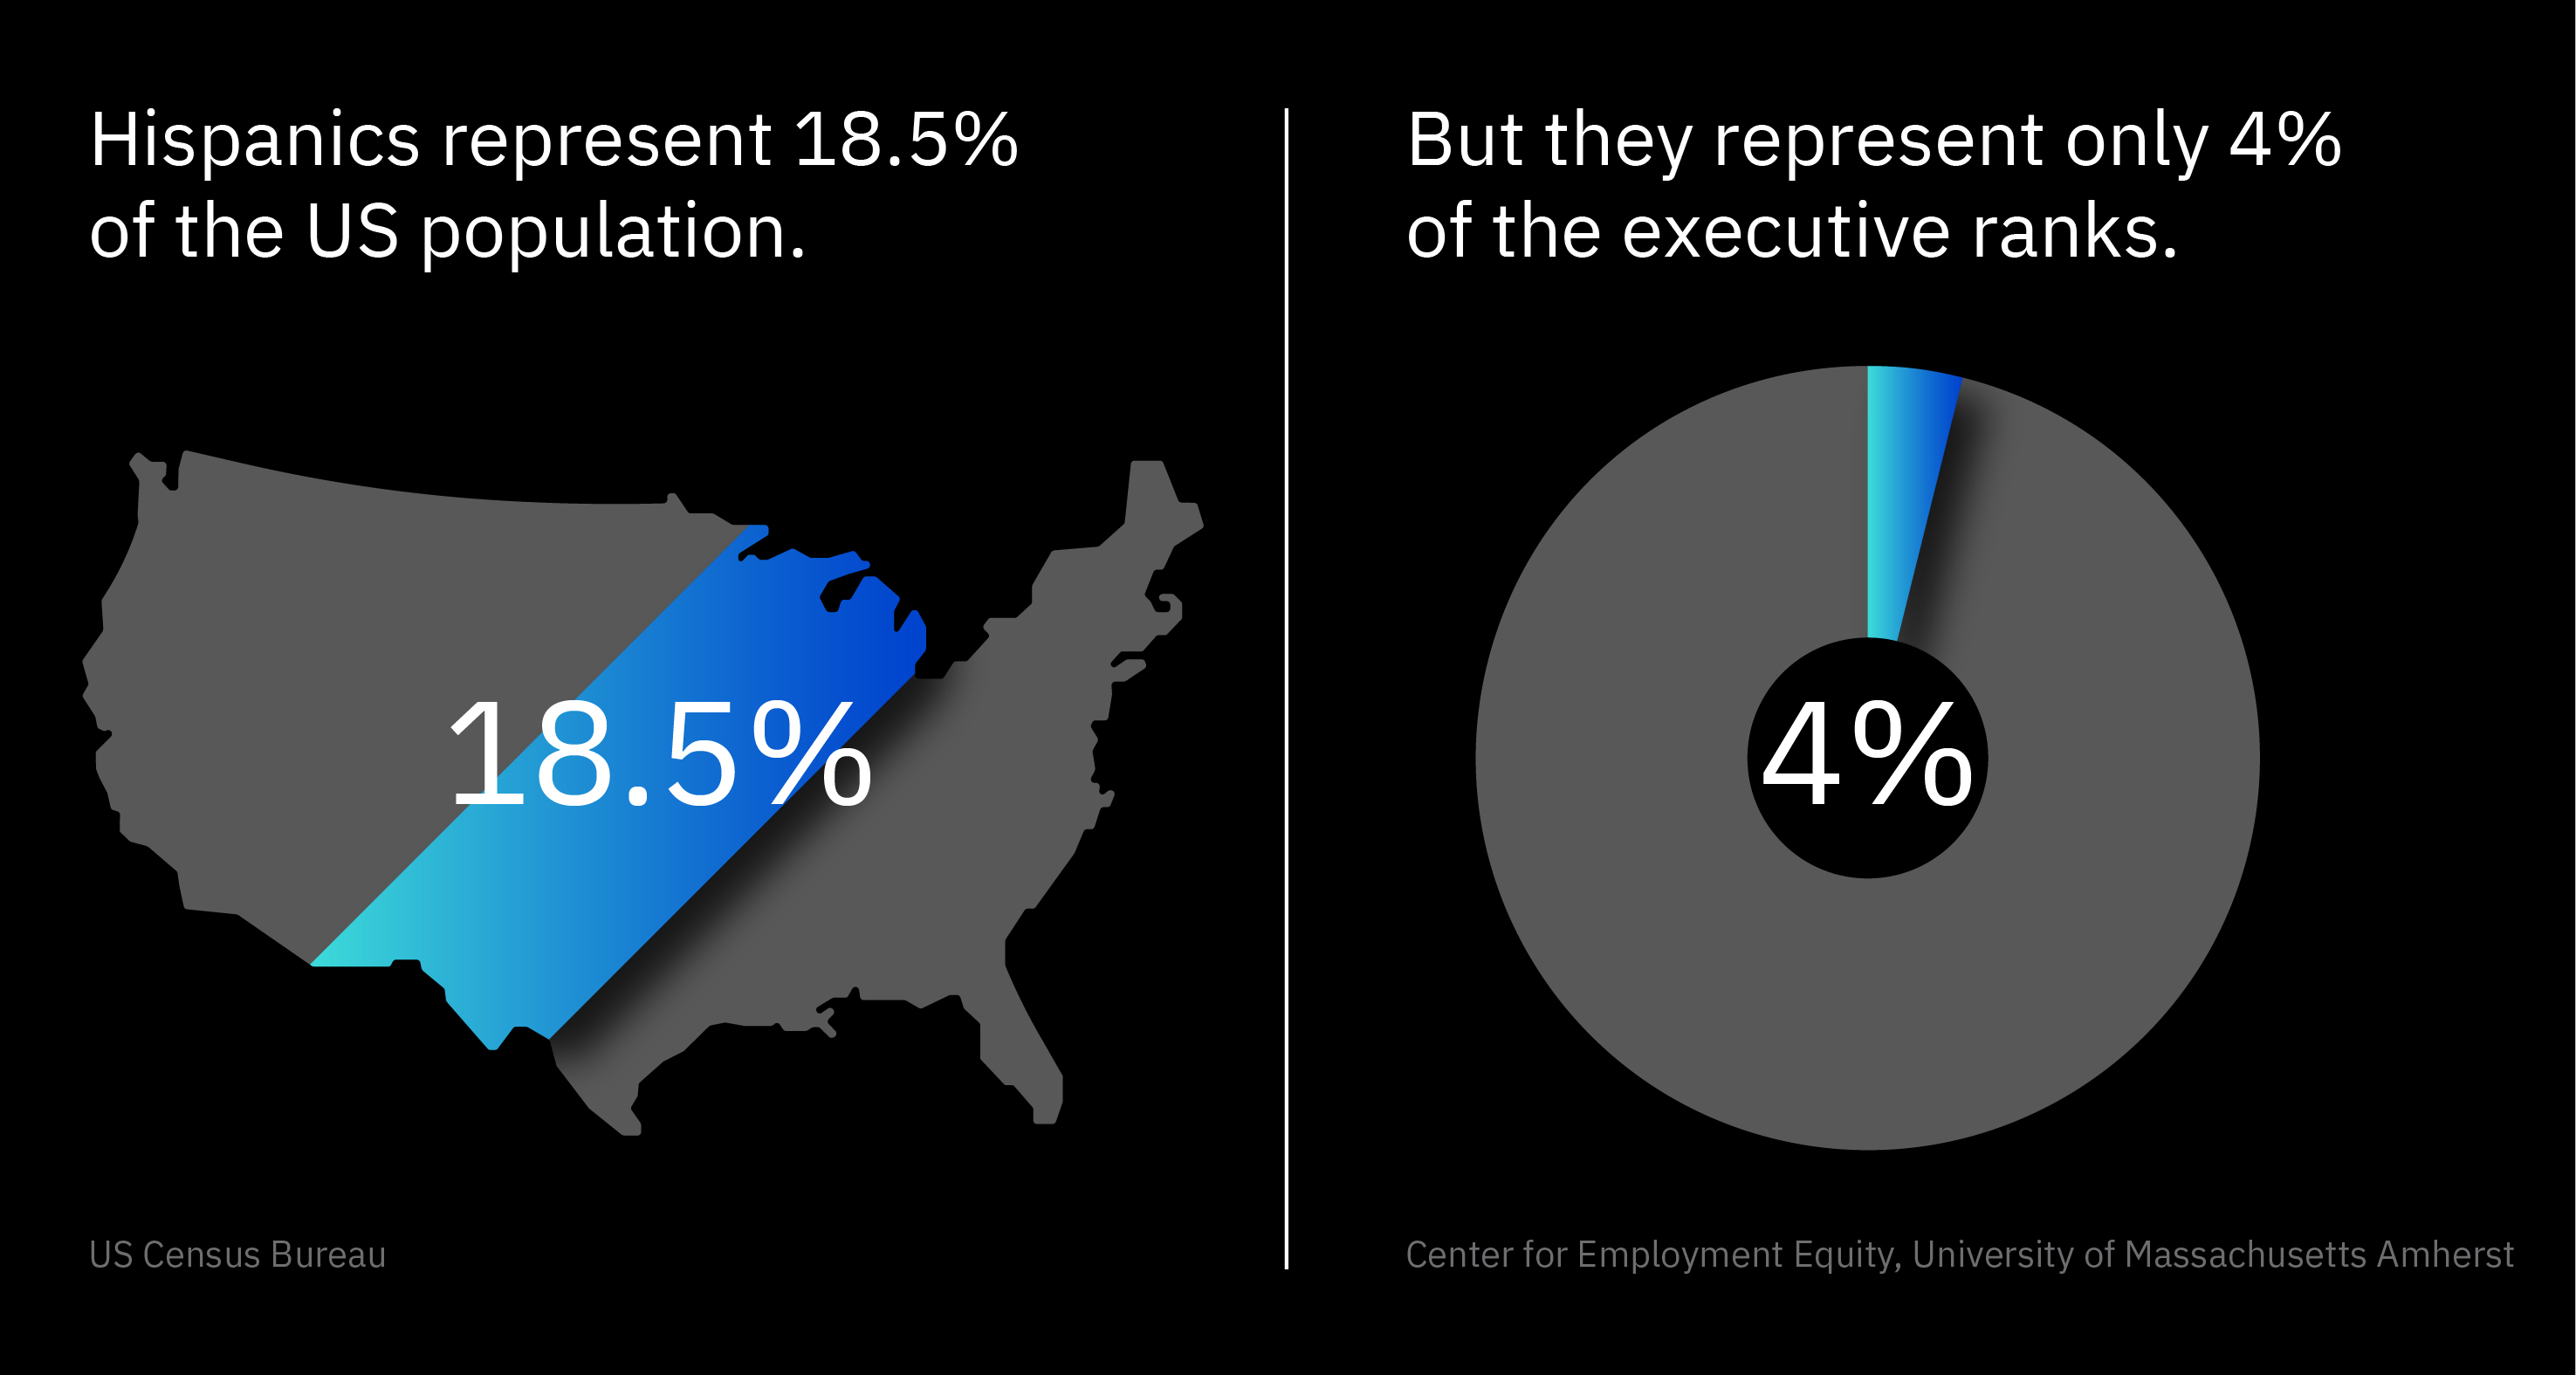 Hispanics represent 18.5 percent of the US population, but only 4 percent of executive ranks.